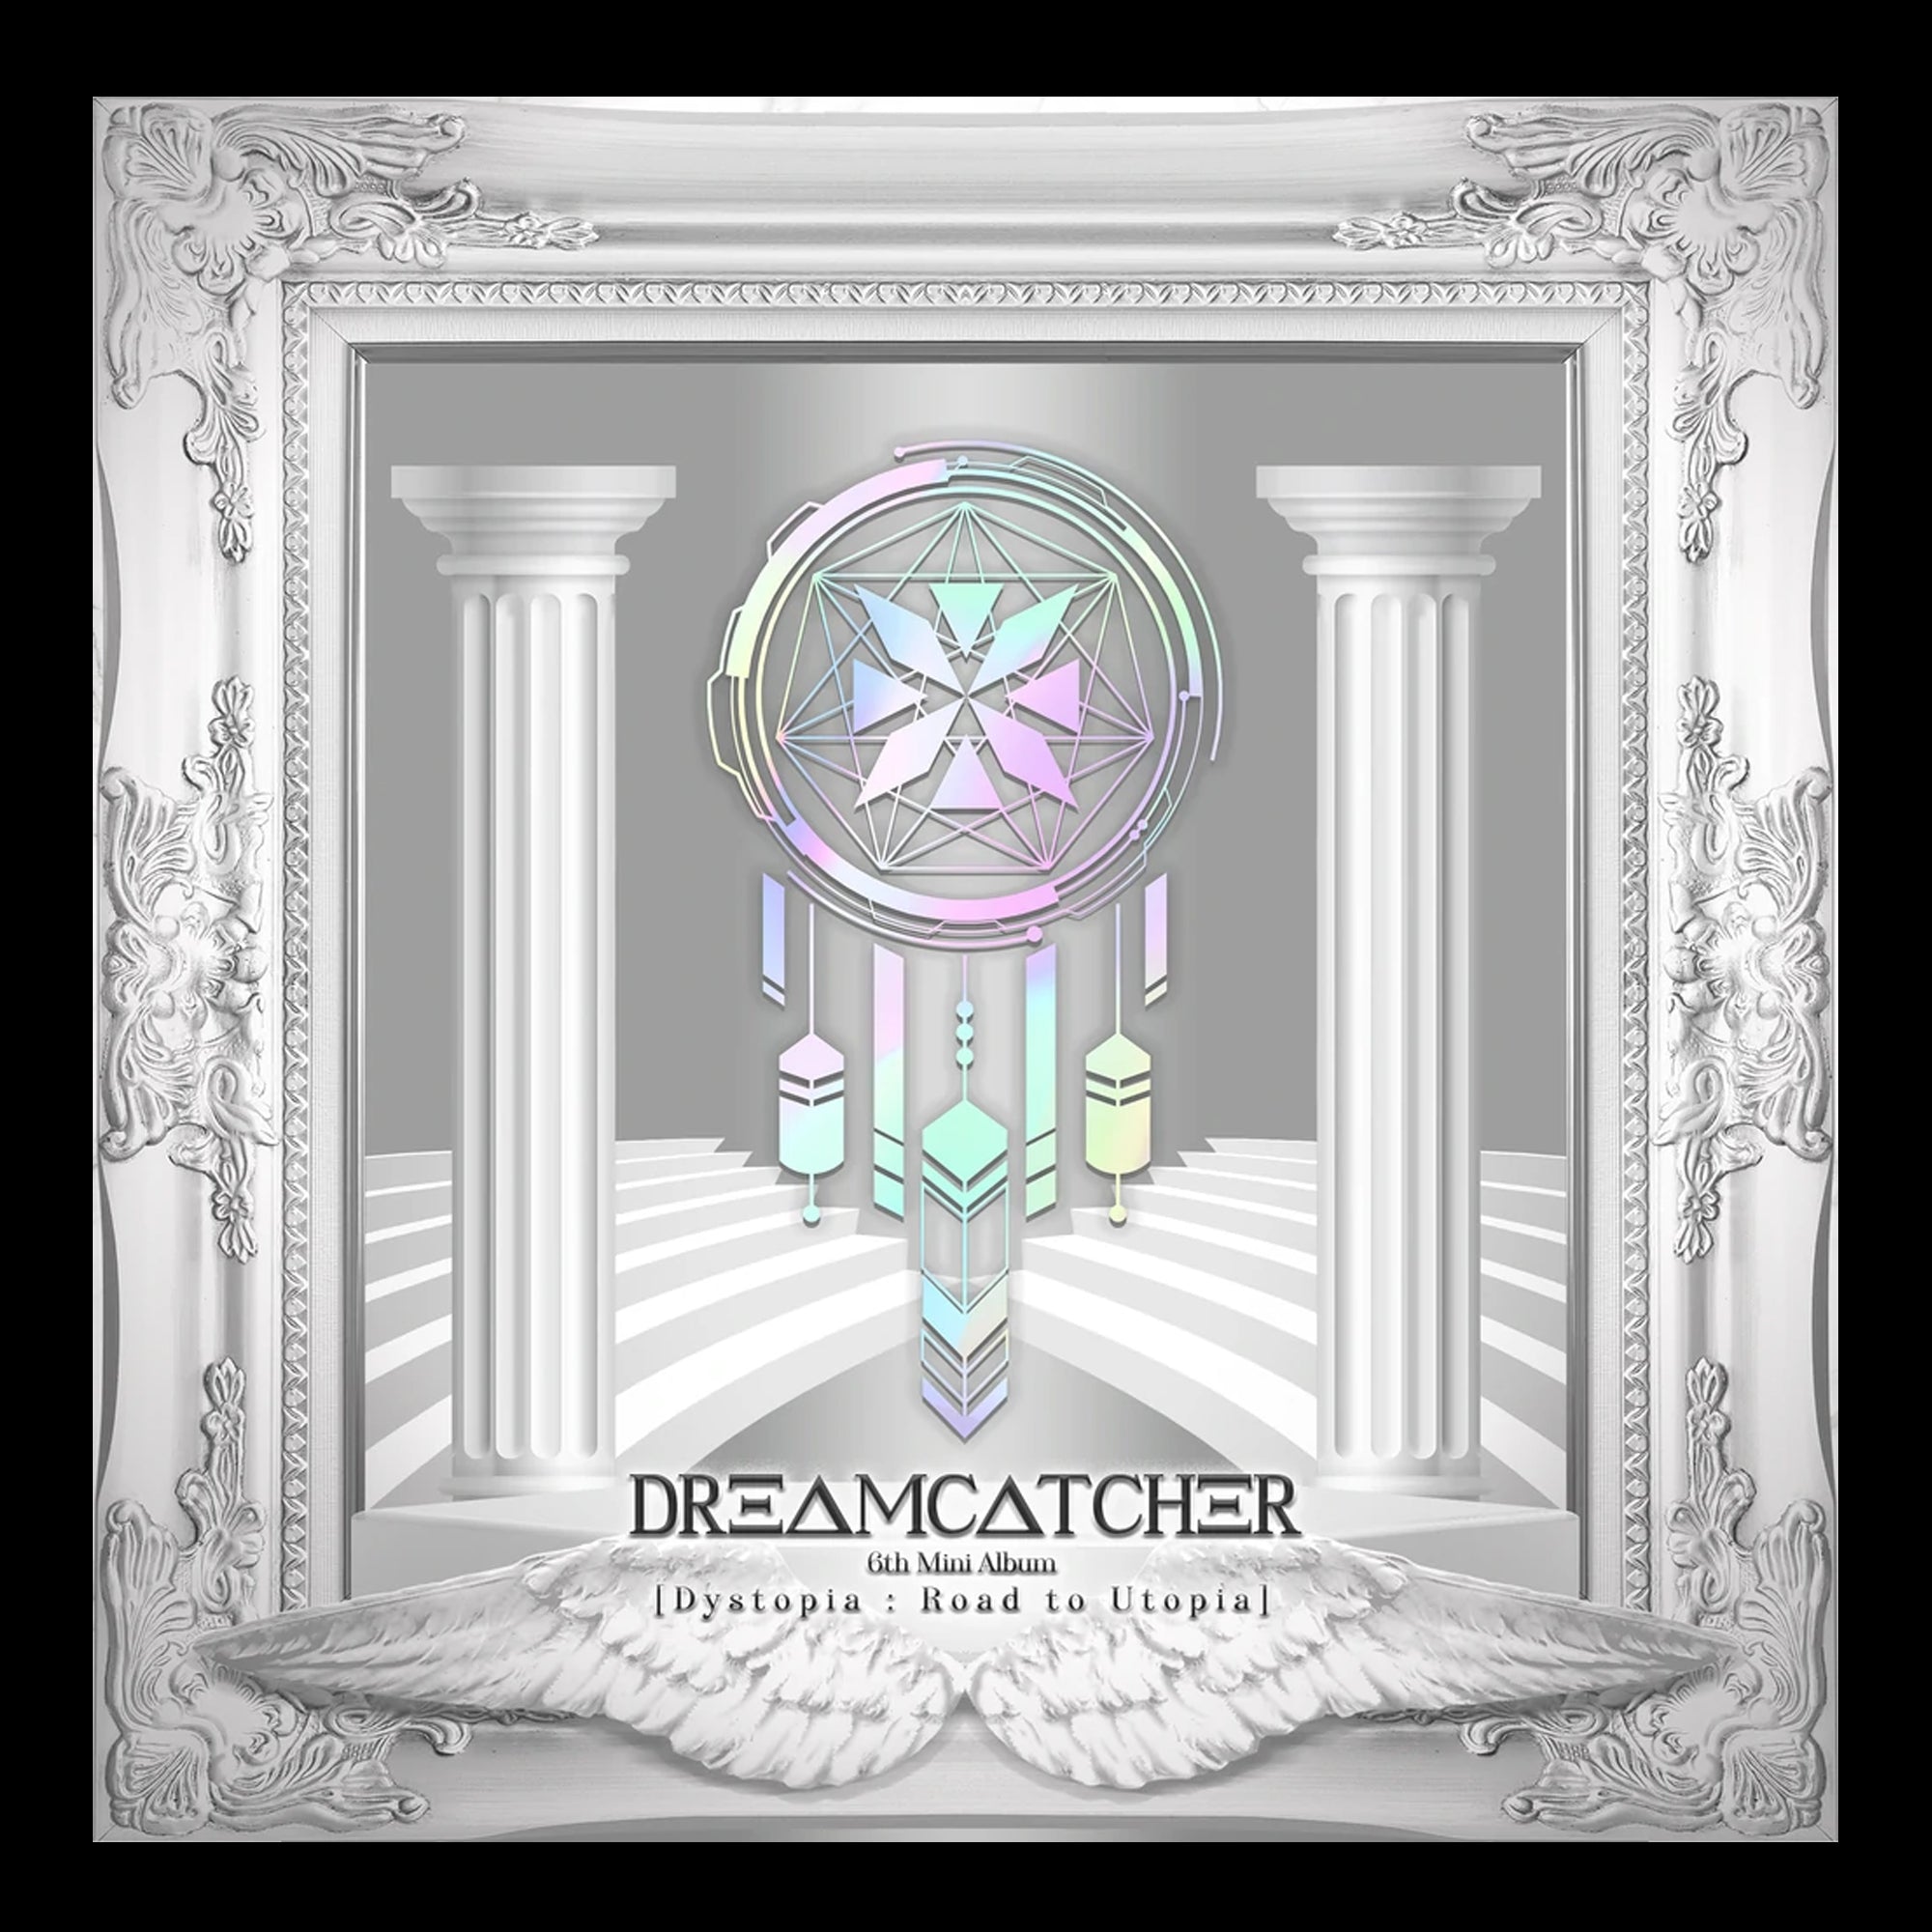 DREAMCATCHER - Dystopia : Road to Utopia Limited Edition